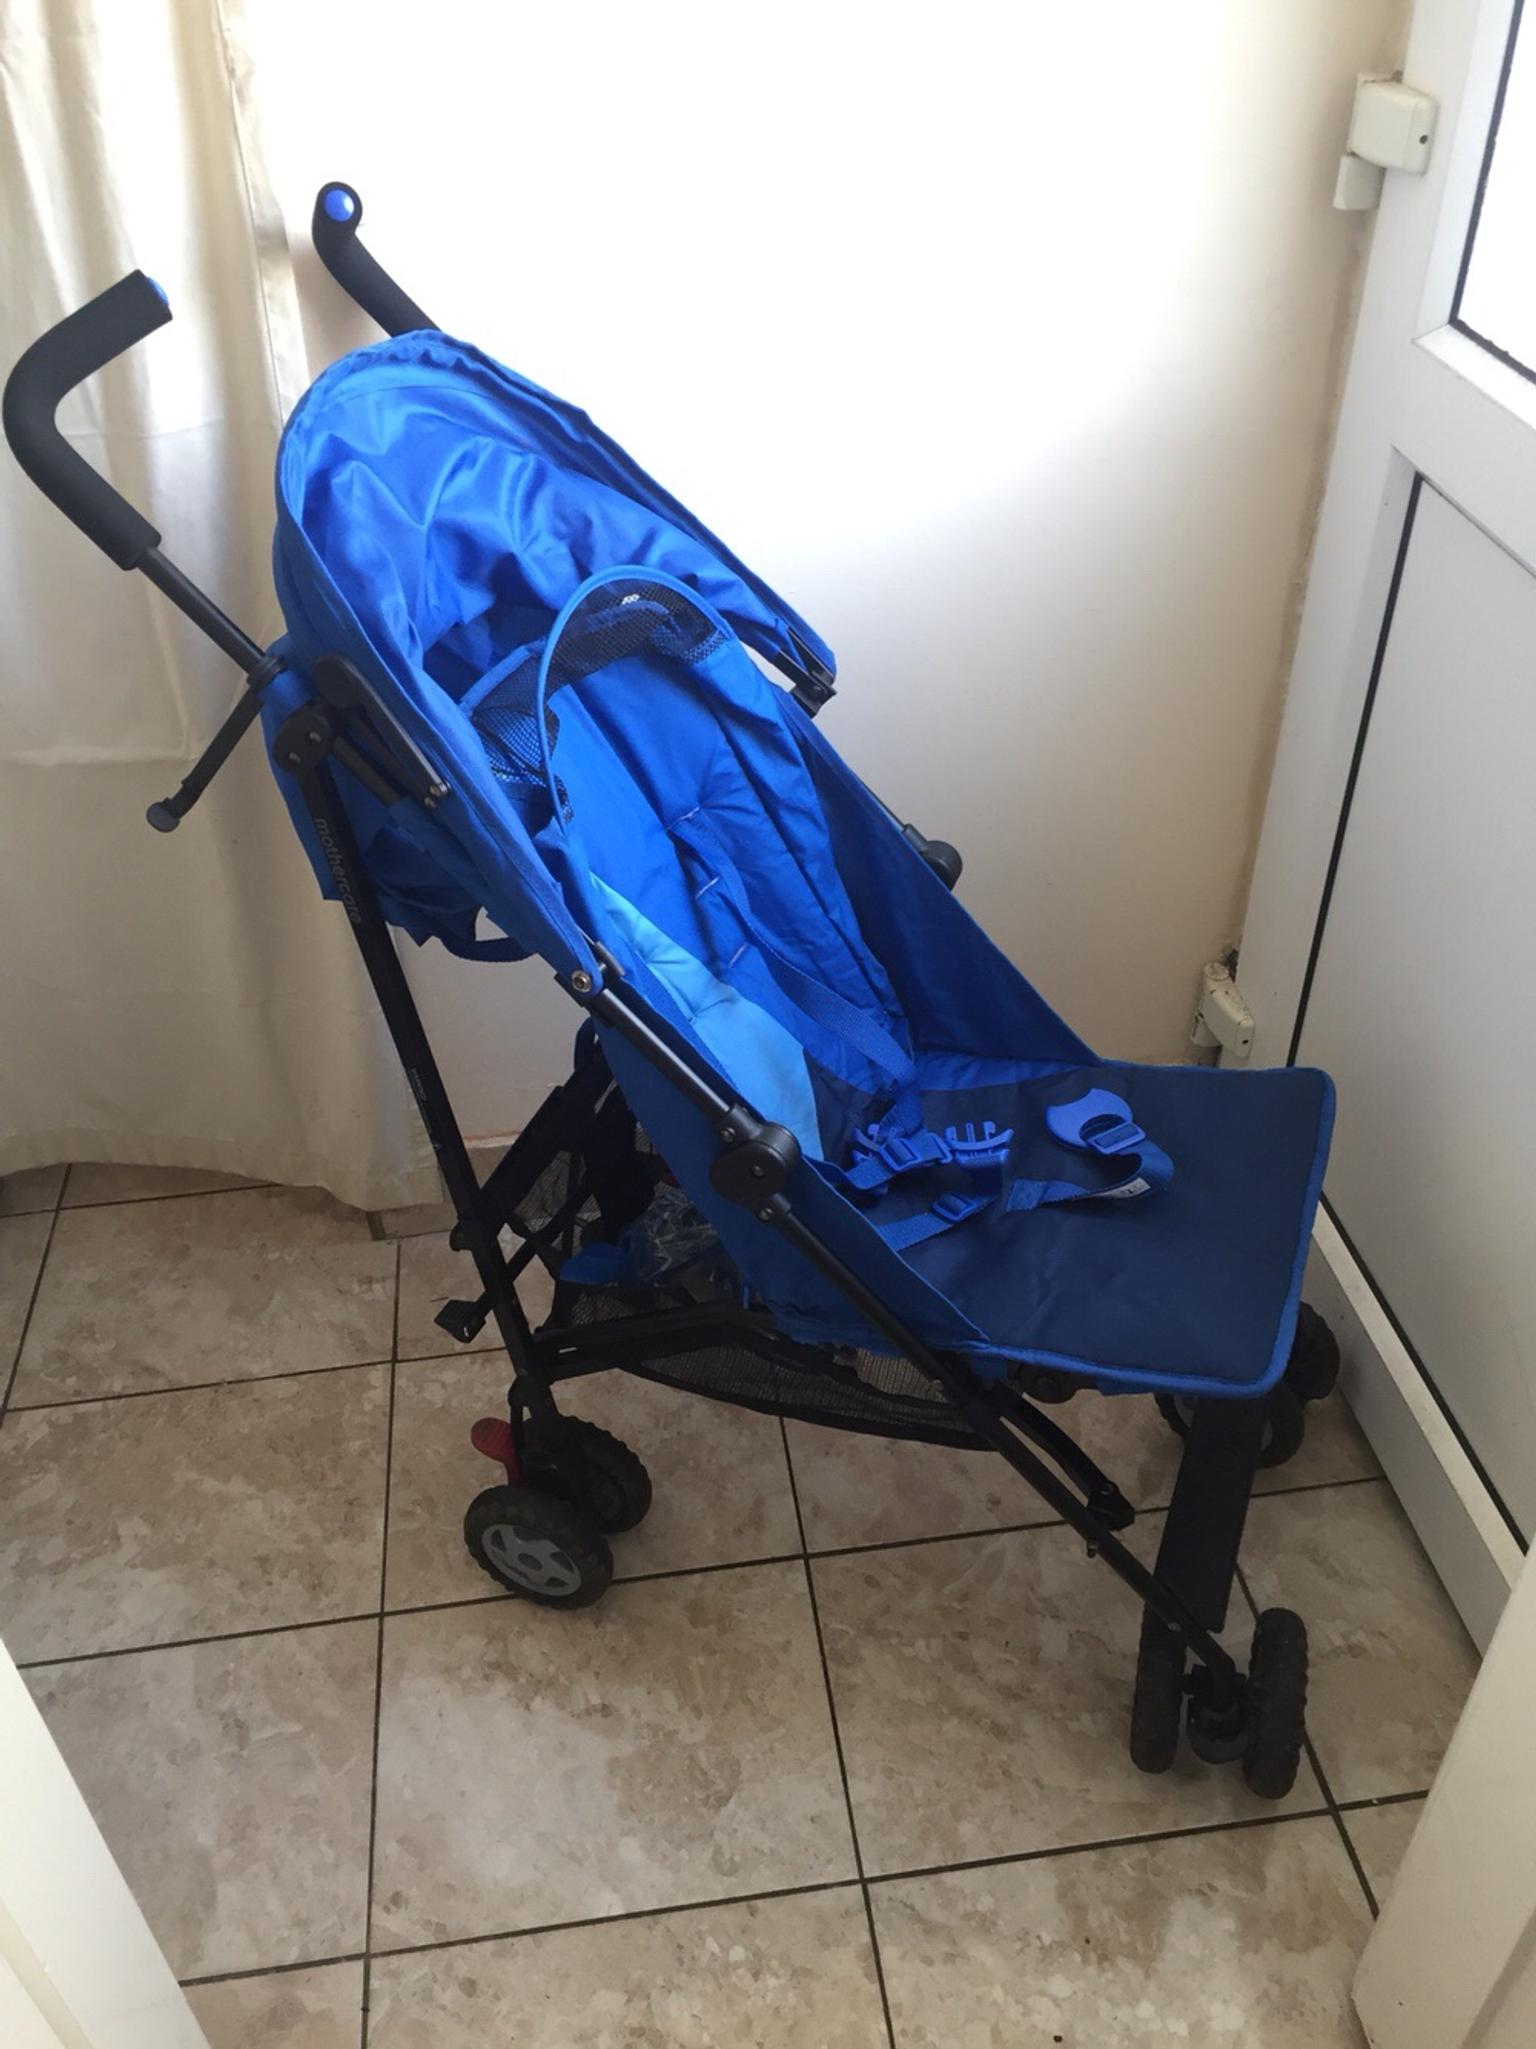 mothercare nanu stroller blue